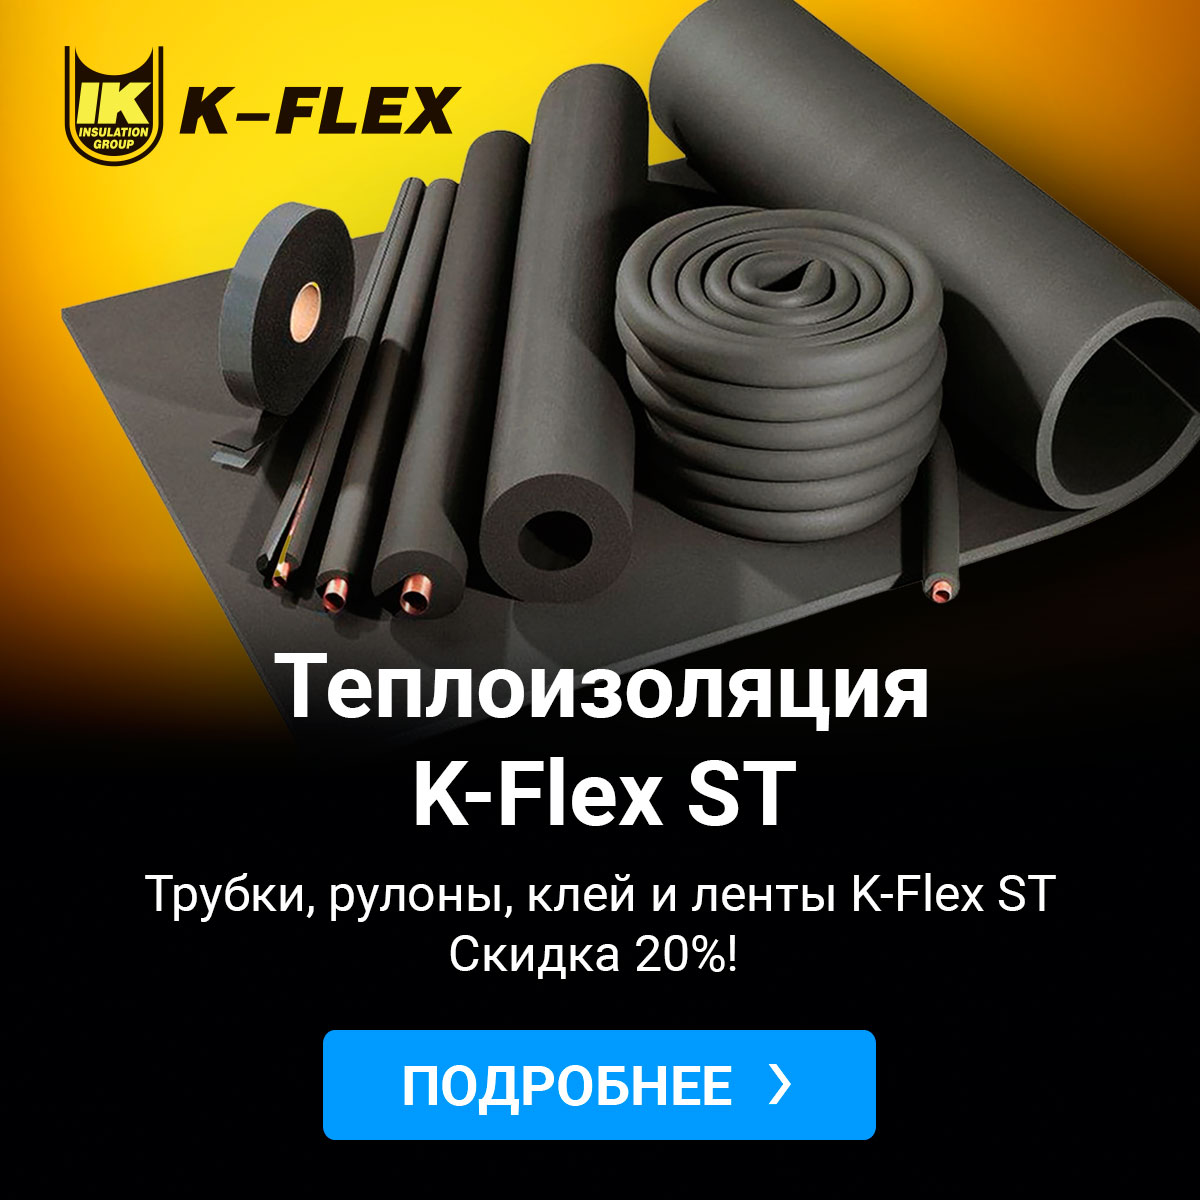 K-flex